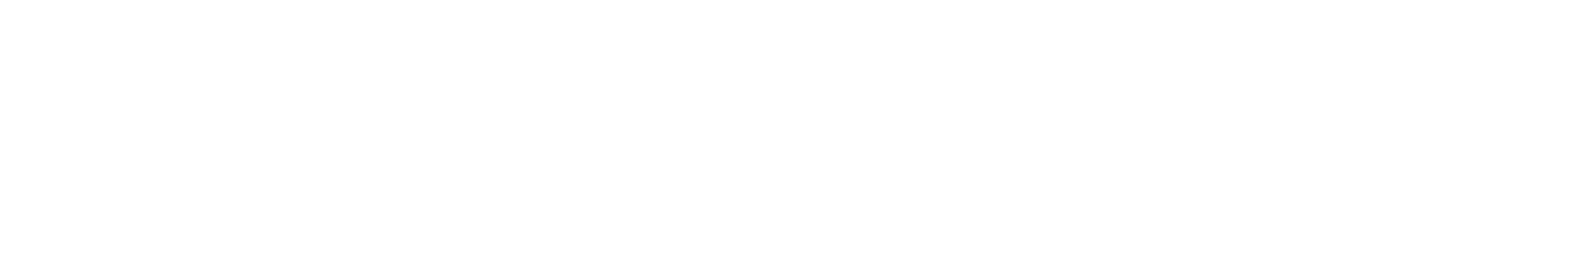 Hexatronic Group AB Logo groß für dunkle Hintergründe (transparentes PNG)